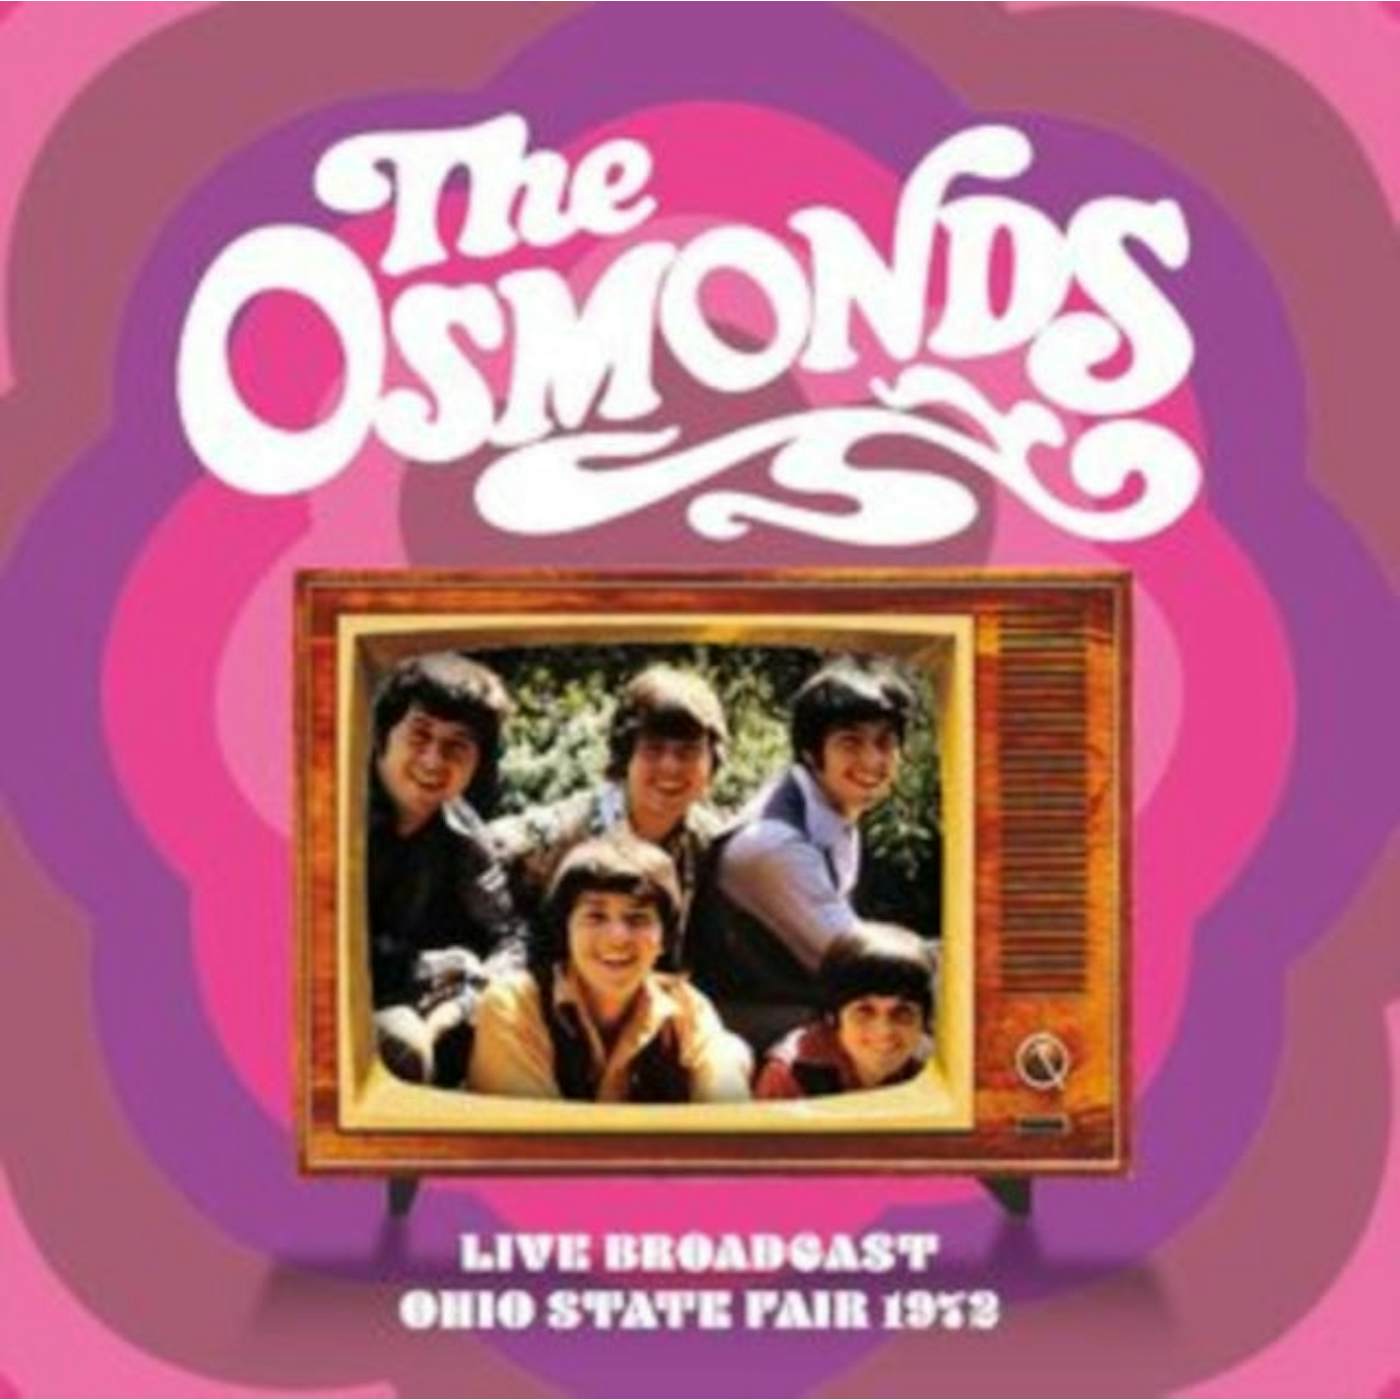 The Osmonds CD - Live Broadcast: Ohio State Fair, 1972